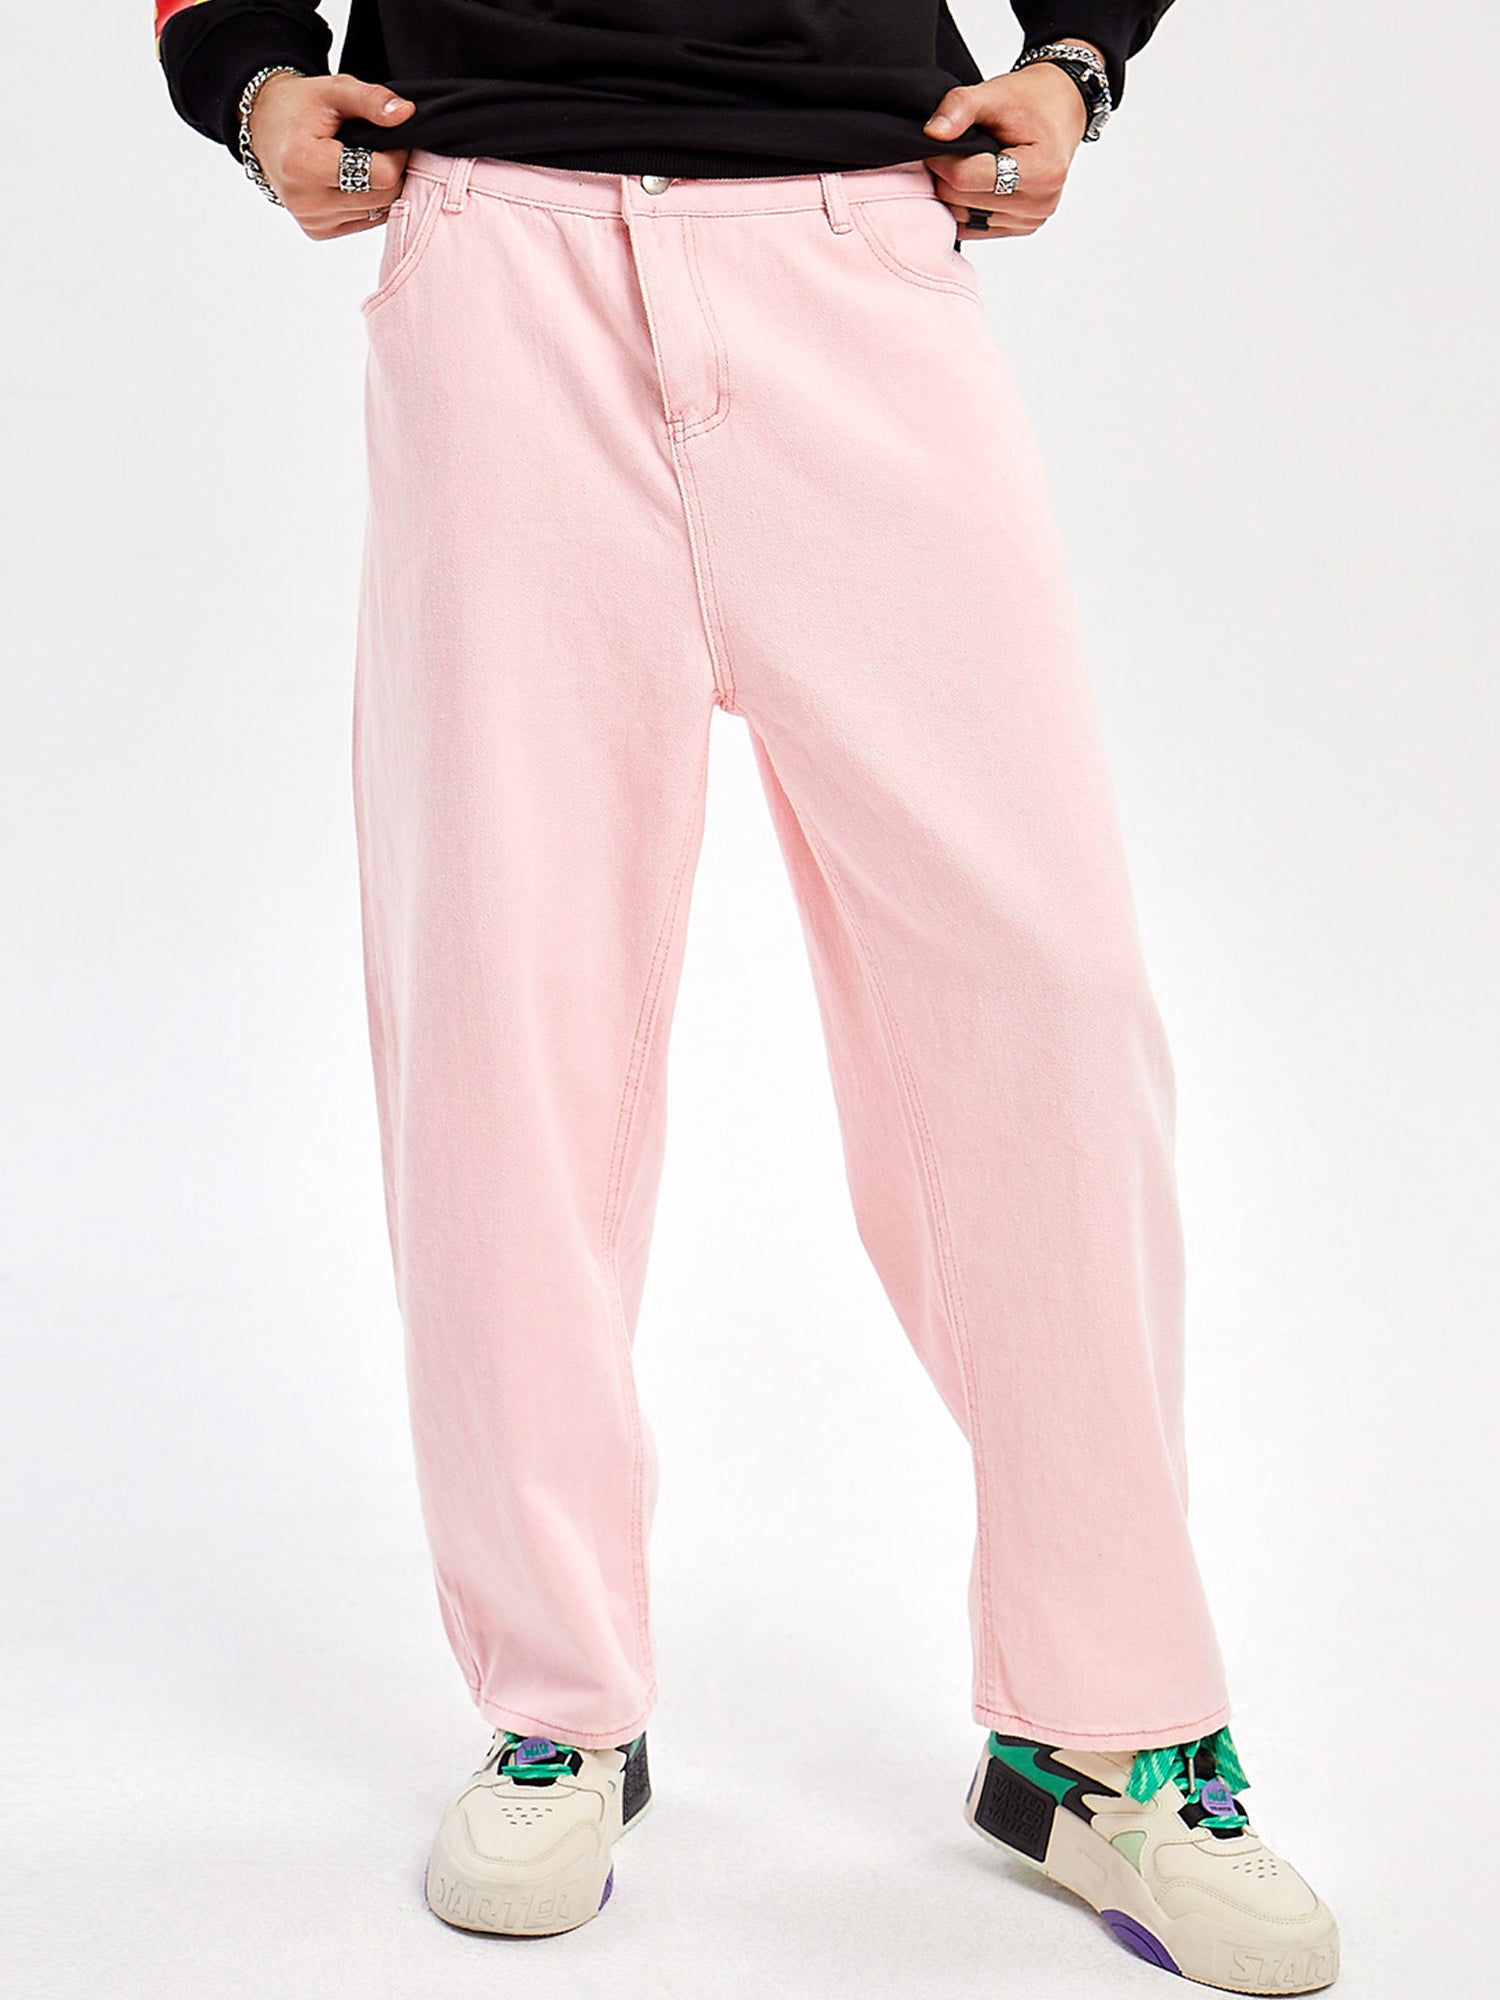 JUSTNOTAG Casual Street HipHop Print Pink Long Loose Jeans